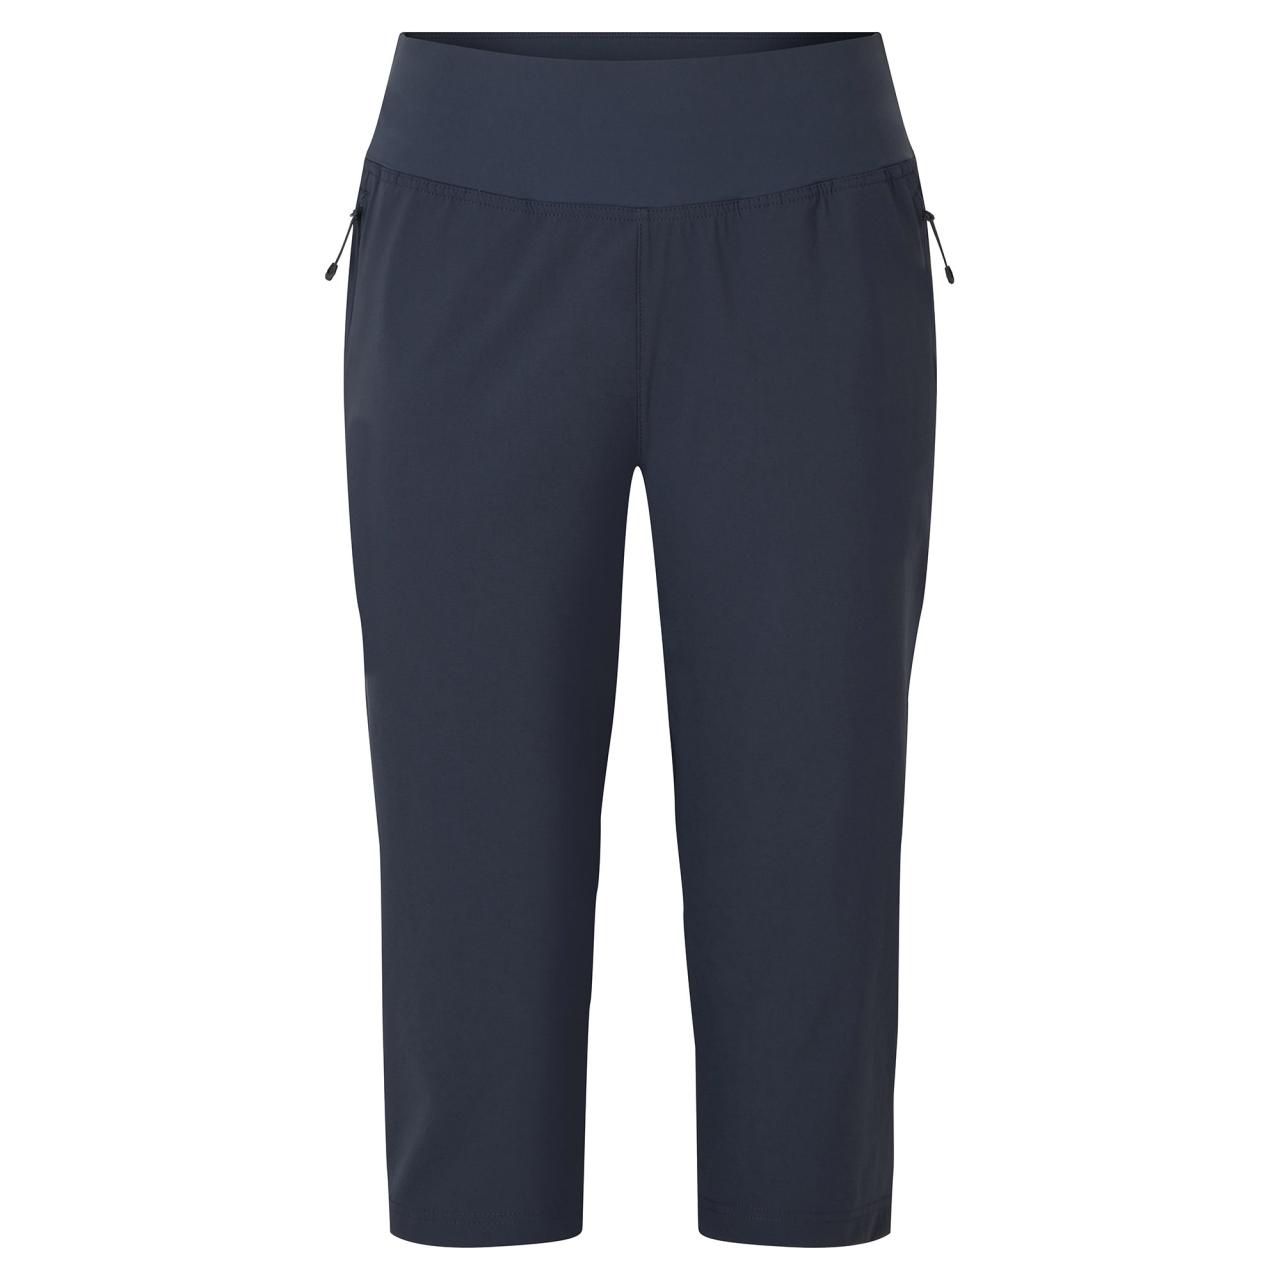 FEM TUCANA LITE CAPRI PANTS-ECLIPSE BLUE-UK16/XL dámské kalhoty modré